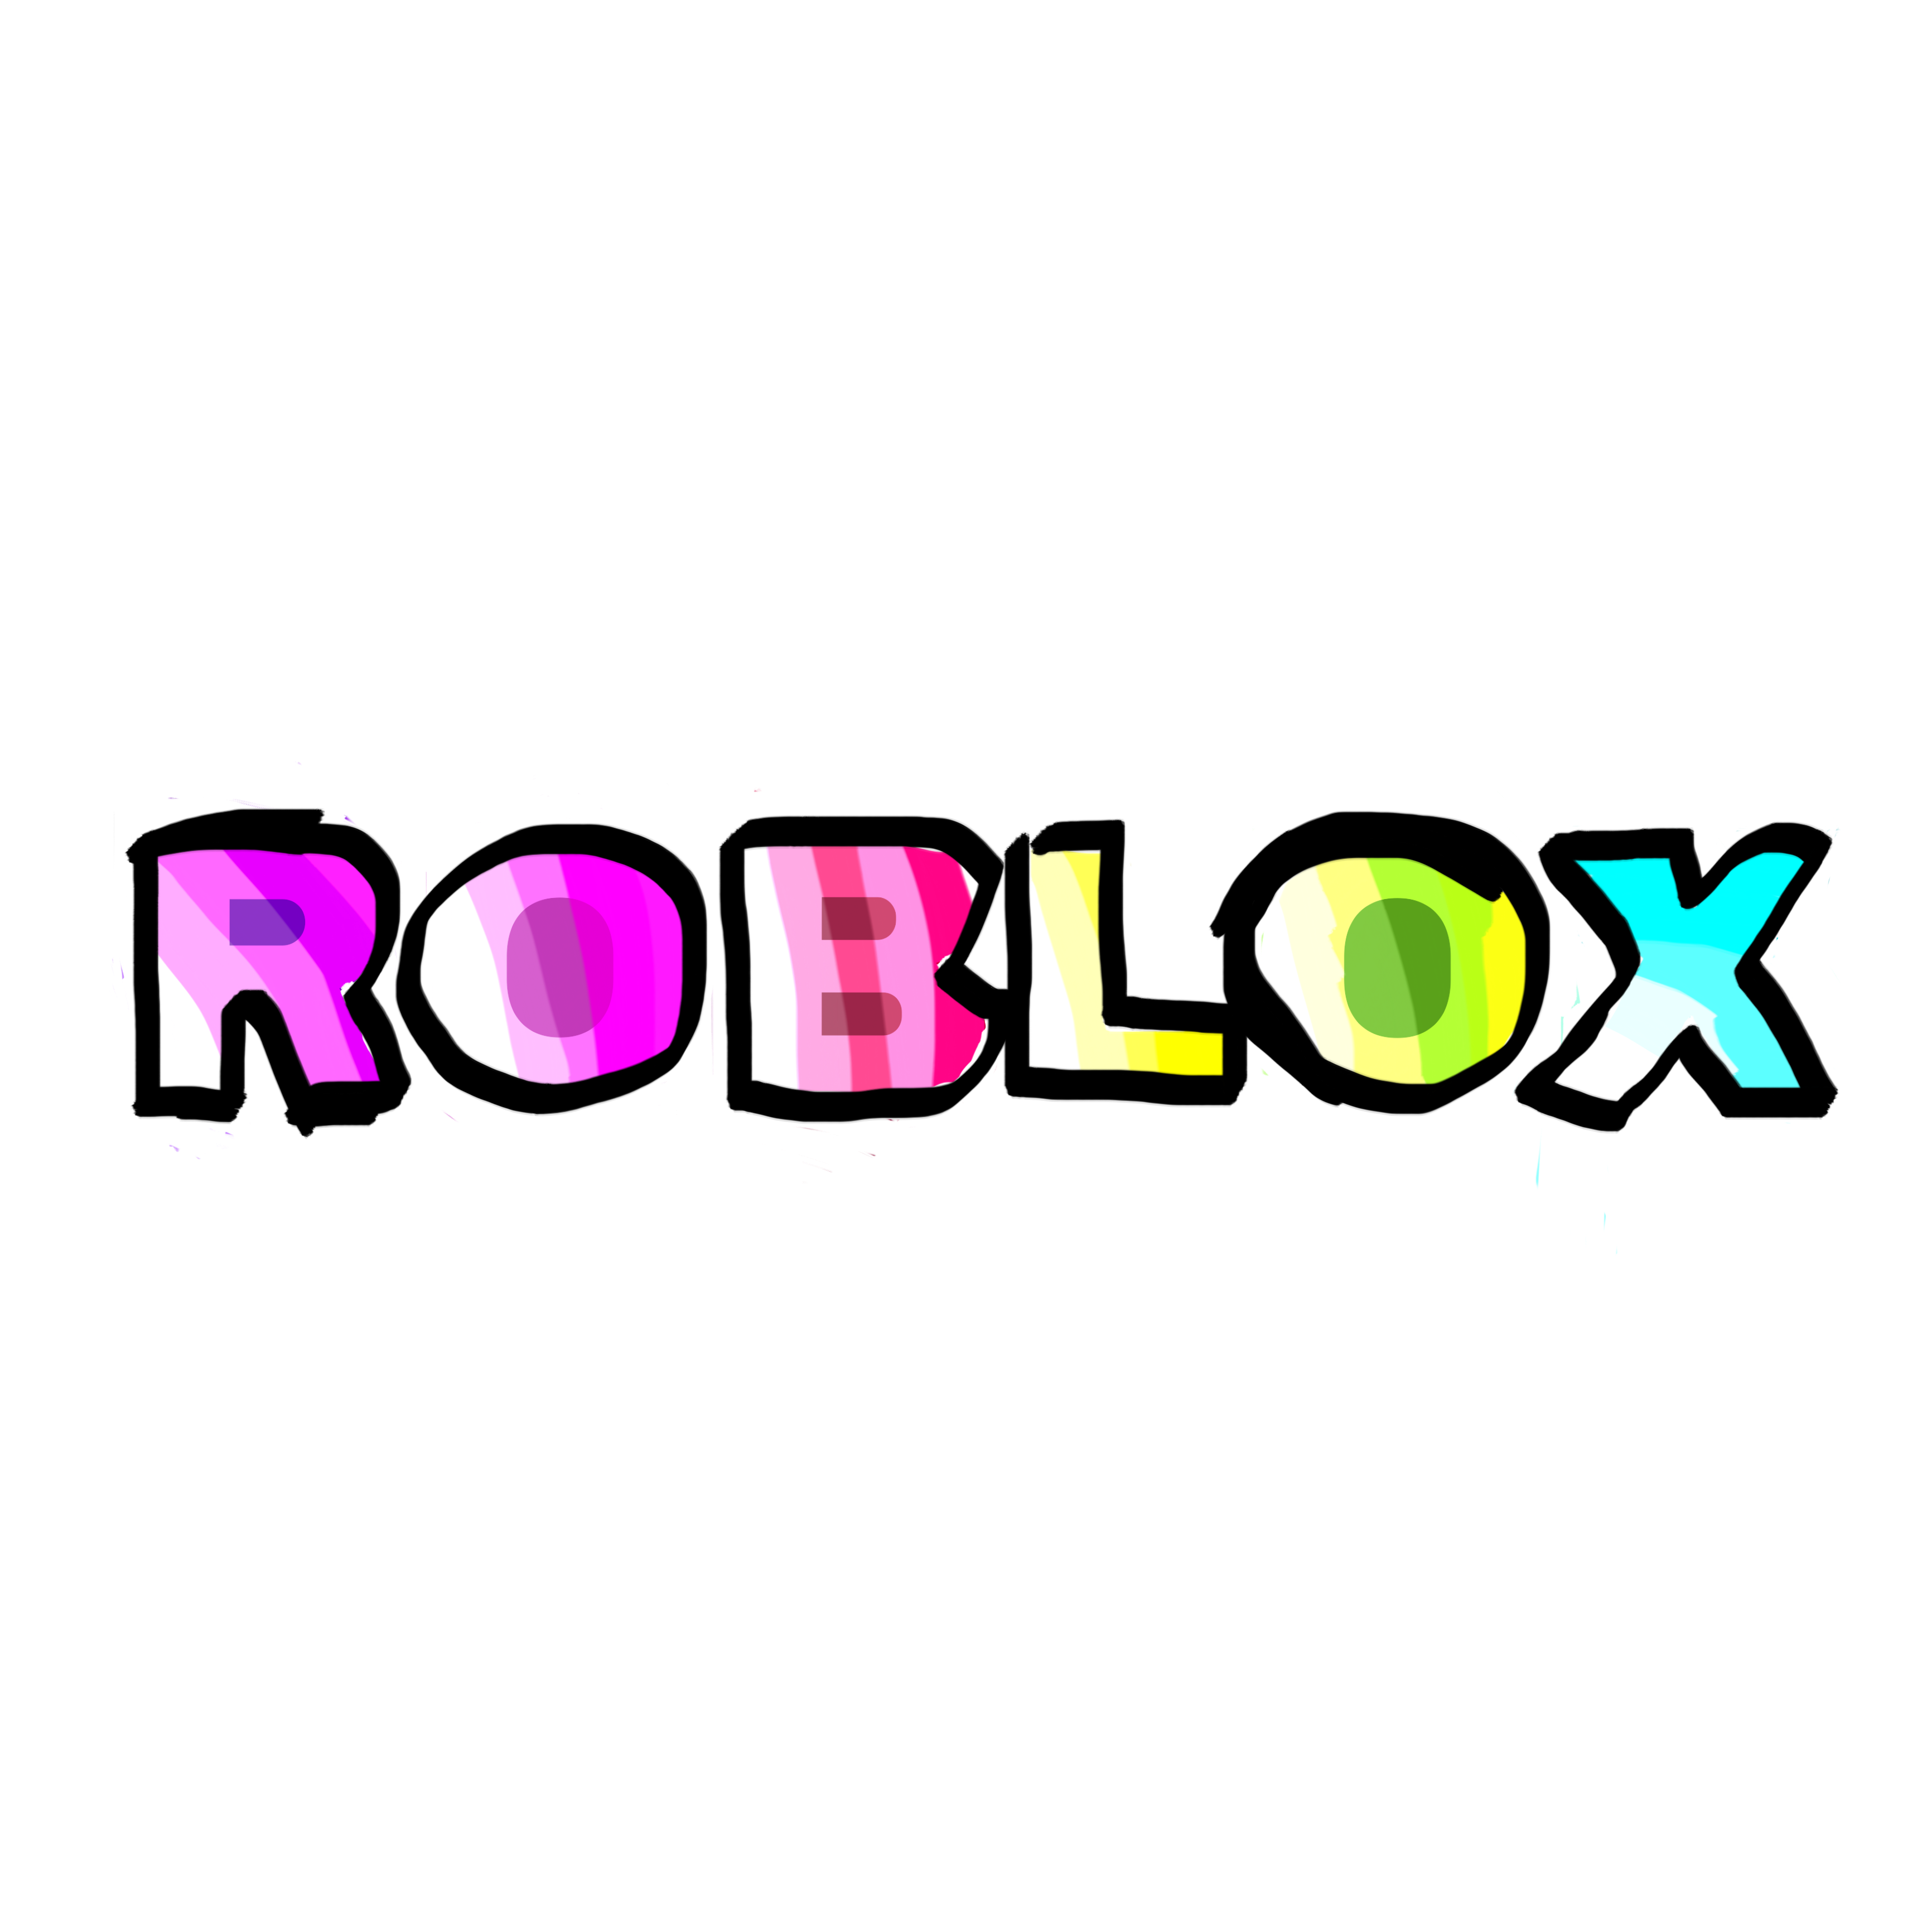 roblox freetoedit #roblox #freetoedit sticker by @dmichelled